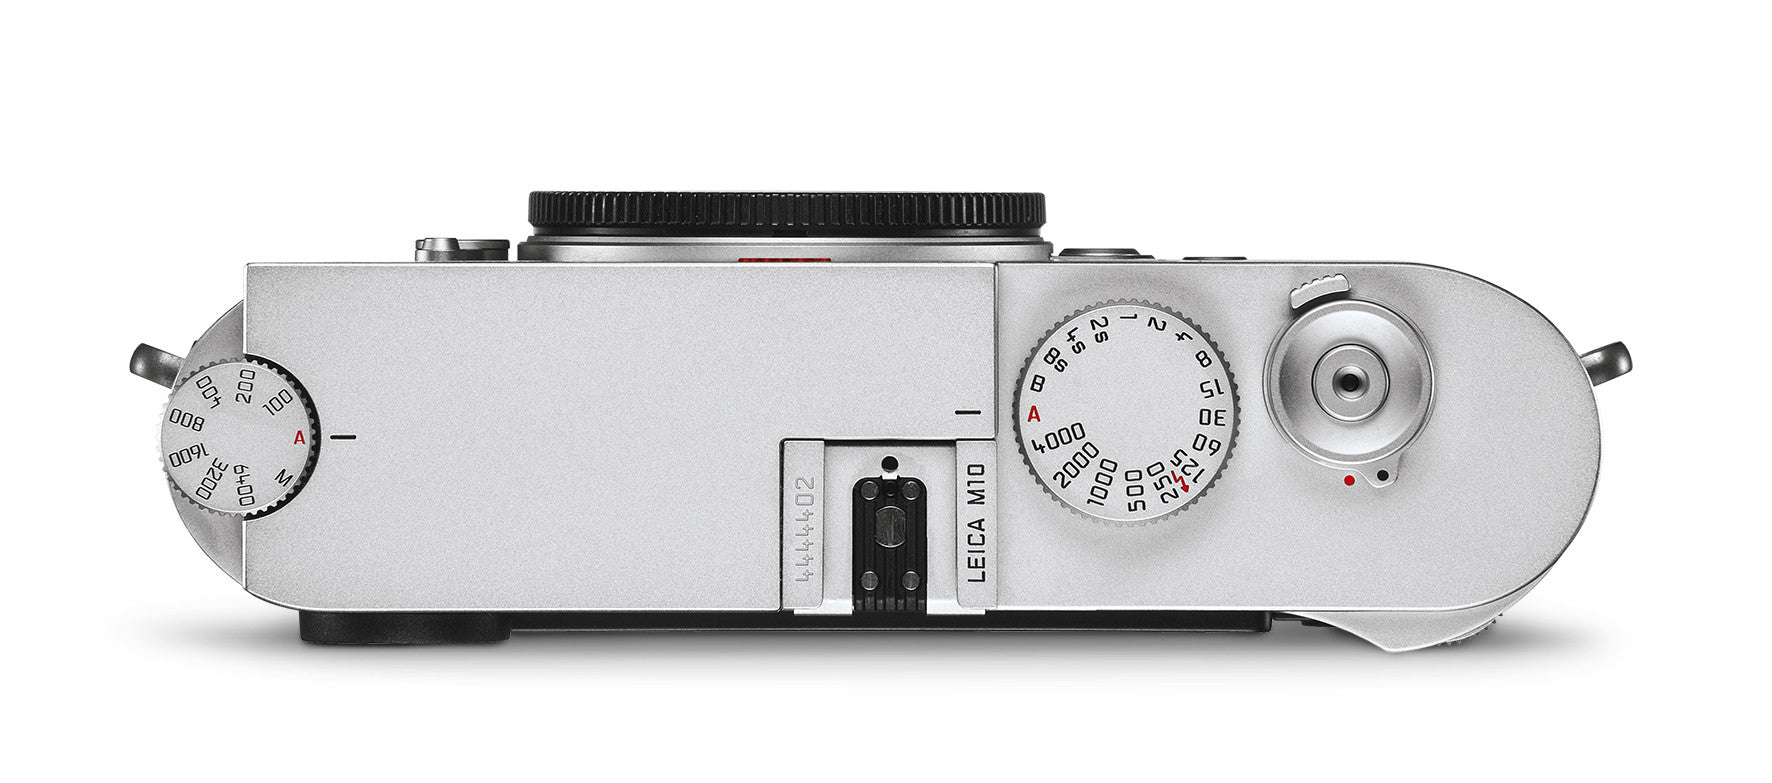 Leica M10 Digital Camera (Silver), camera mirrorless cameras, Leica - Pictureline  - 5